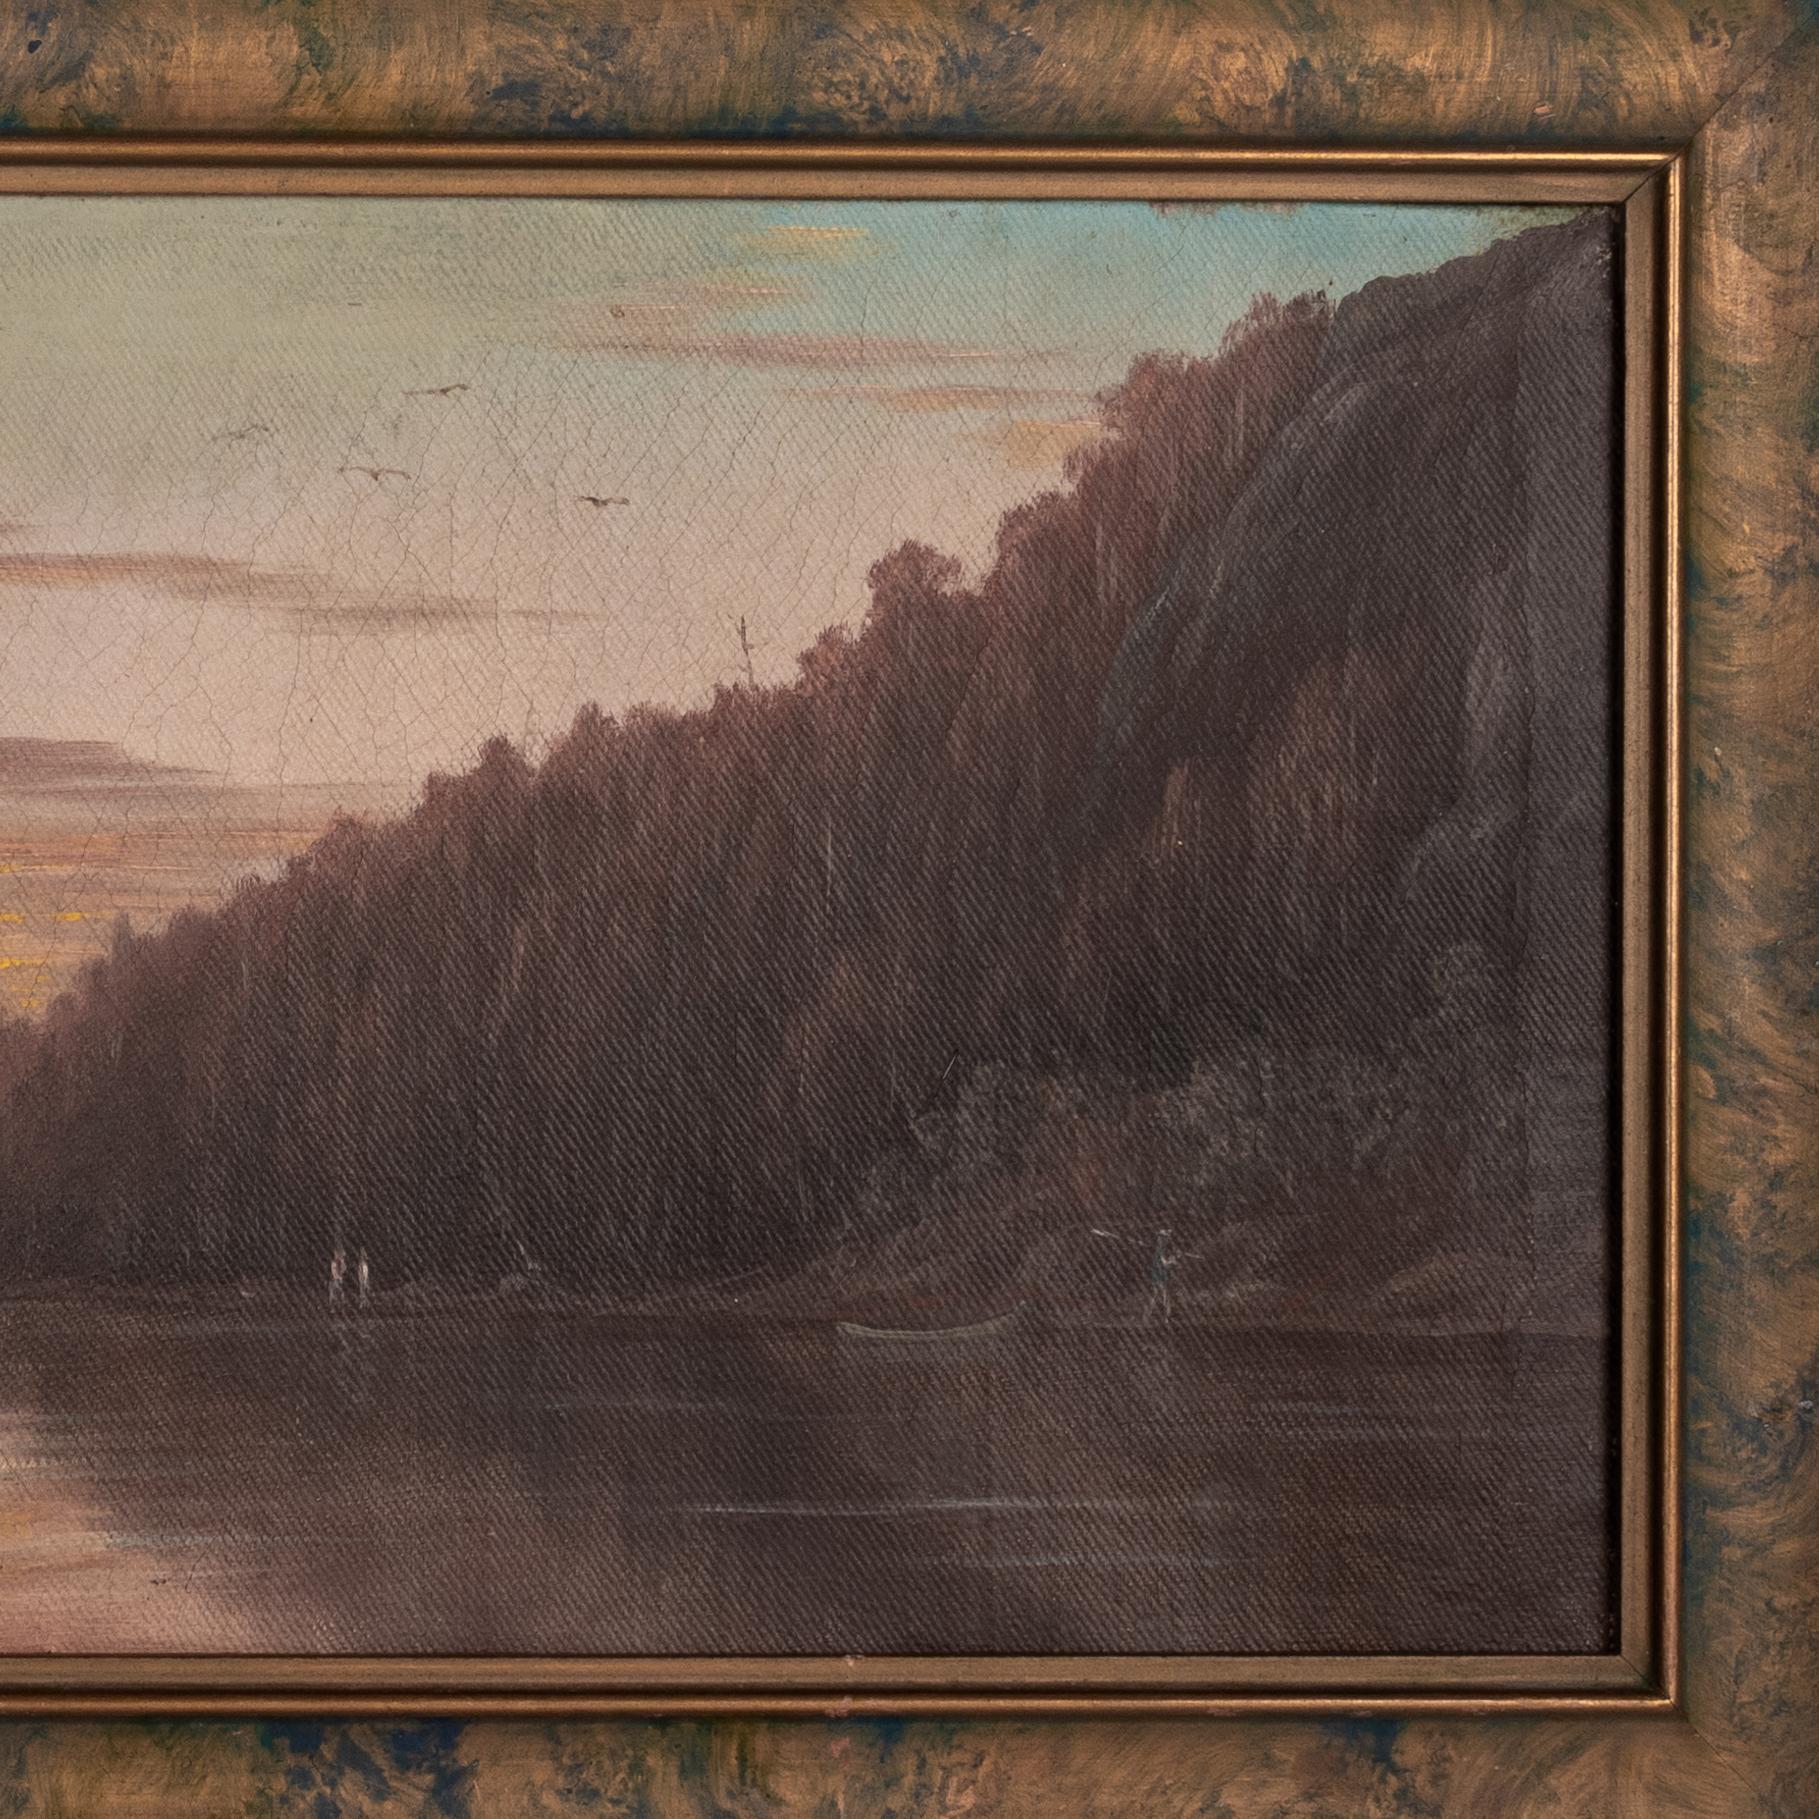 Antique American 19th C Realist California River Landscape Oil on Canvas 1888 For Sale 1